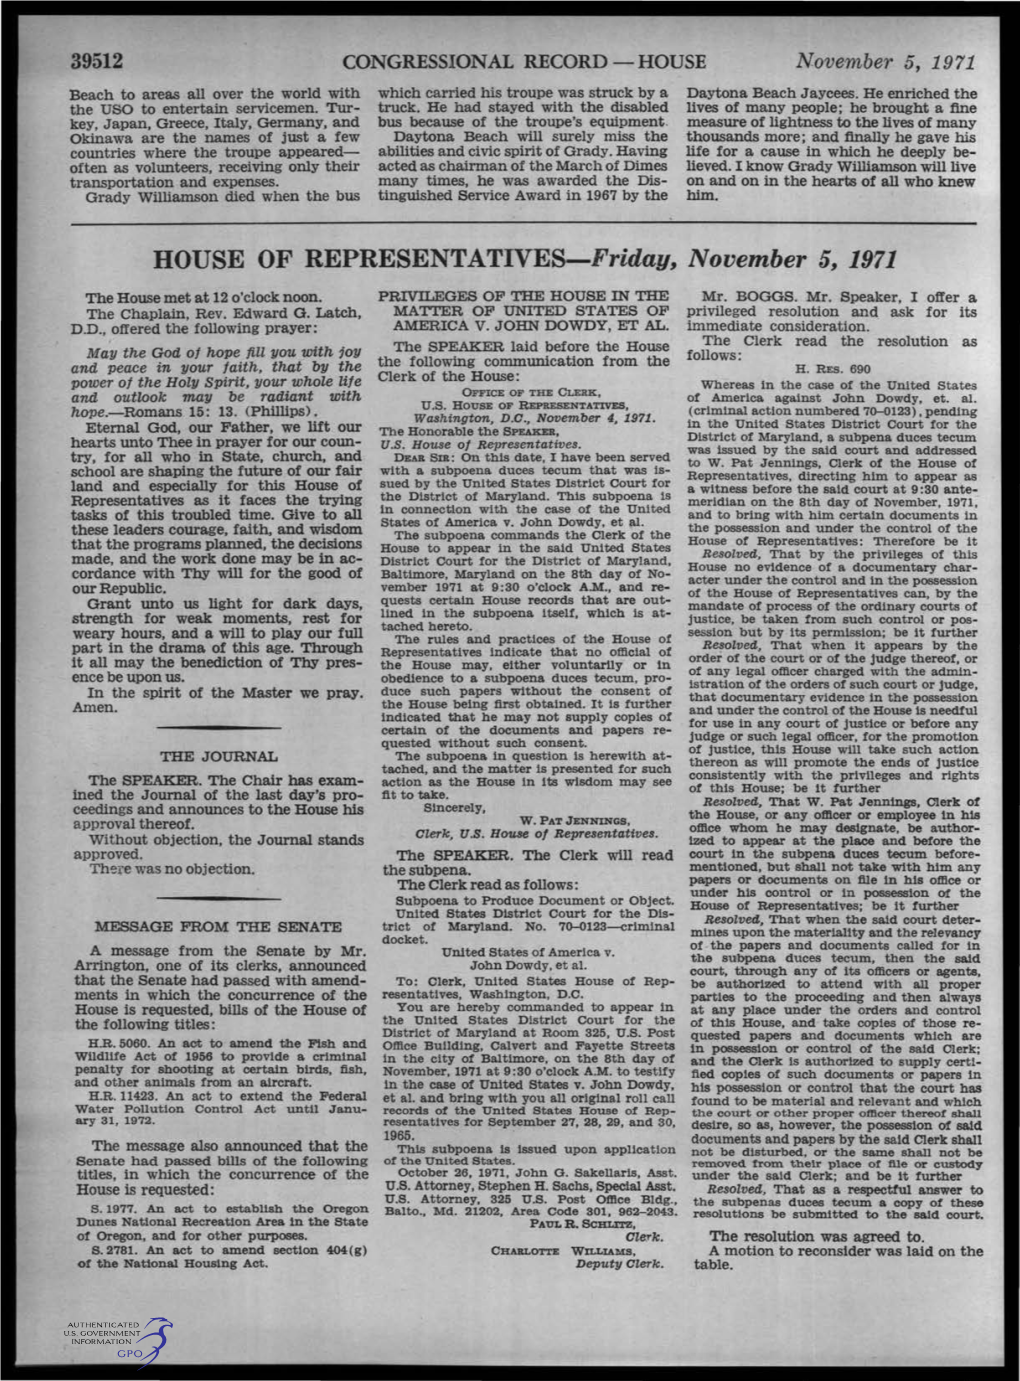 HOUSE of REPRESENTATIVES-Friday, November 5, 1971